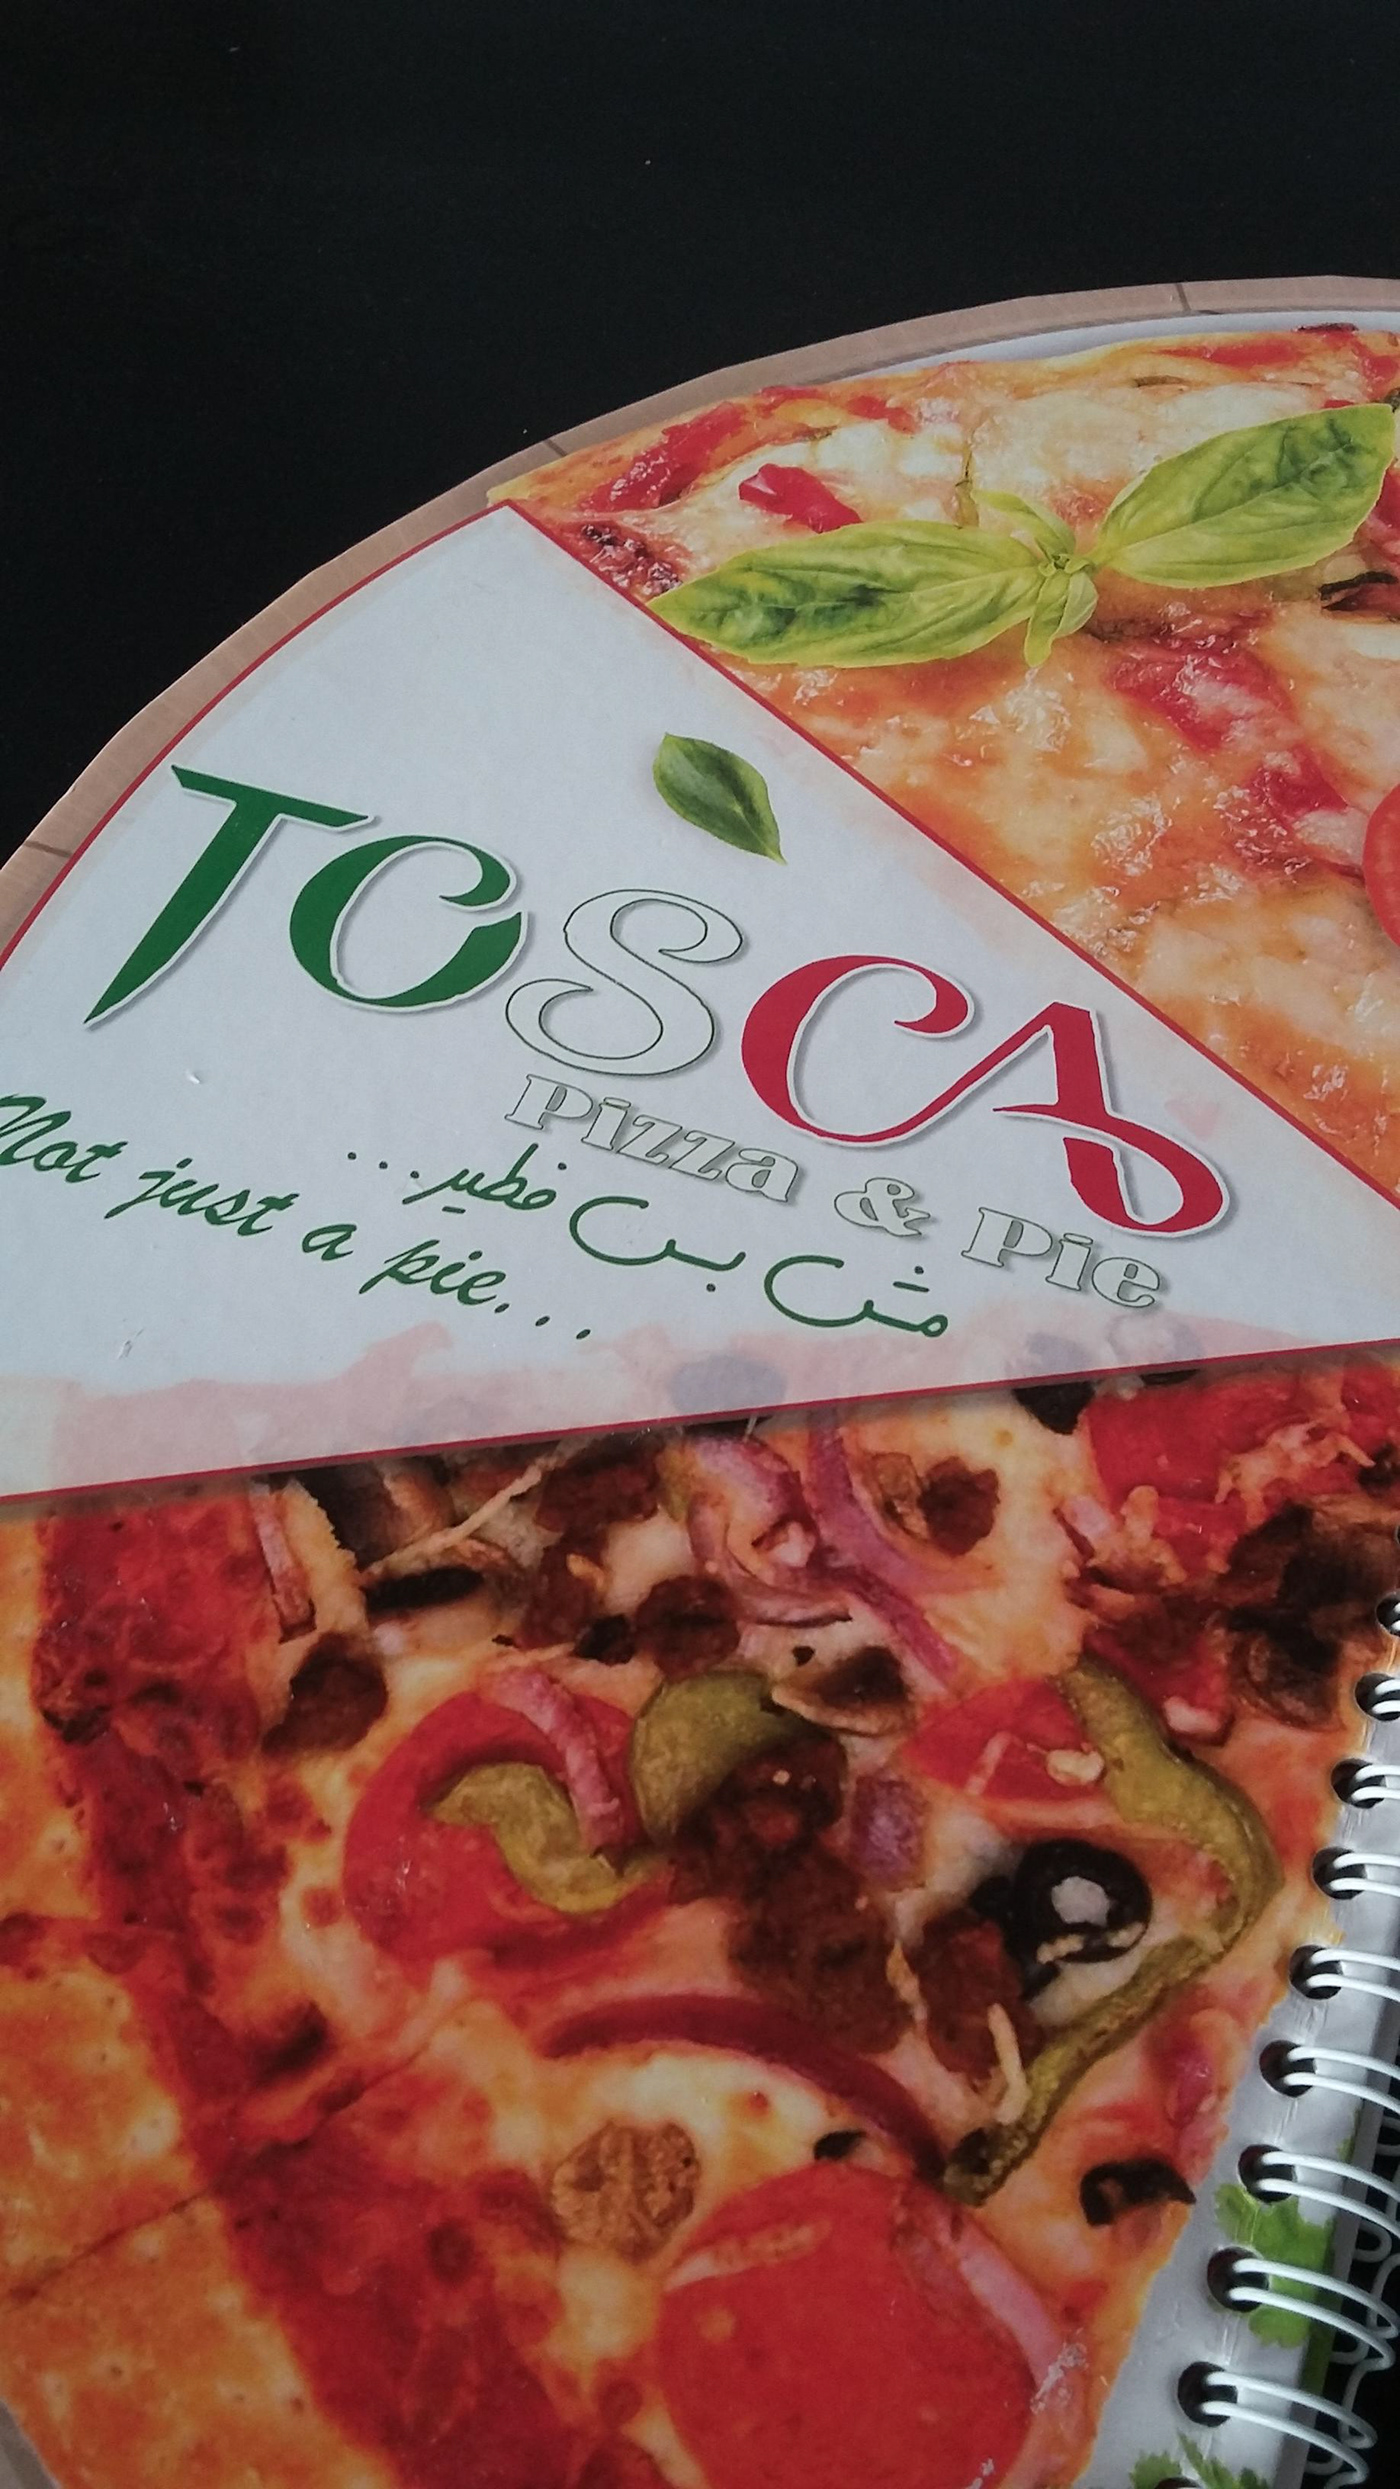 Food  food photo restaurant menu cafe Flye design branding  Advertising  tosca